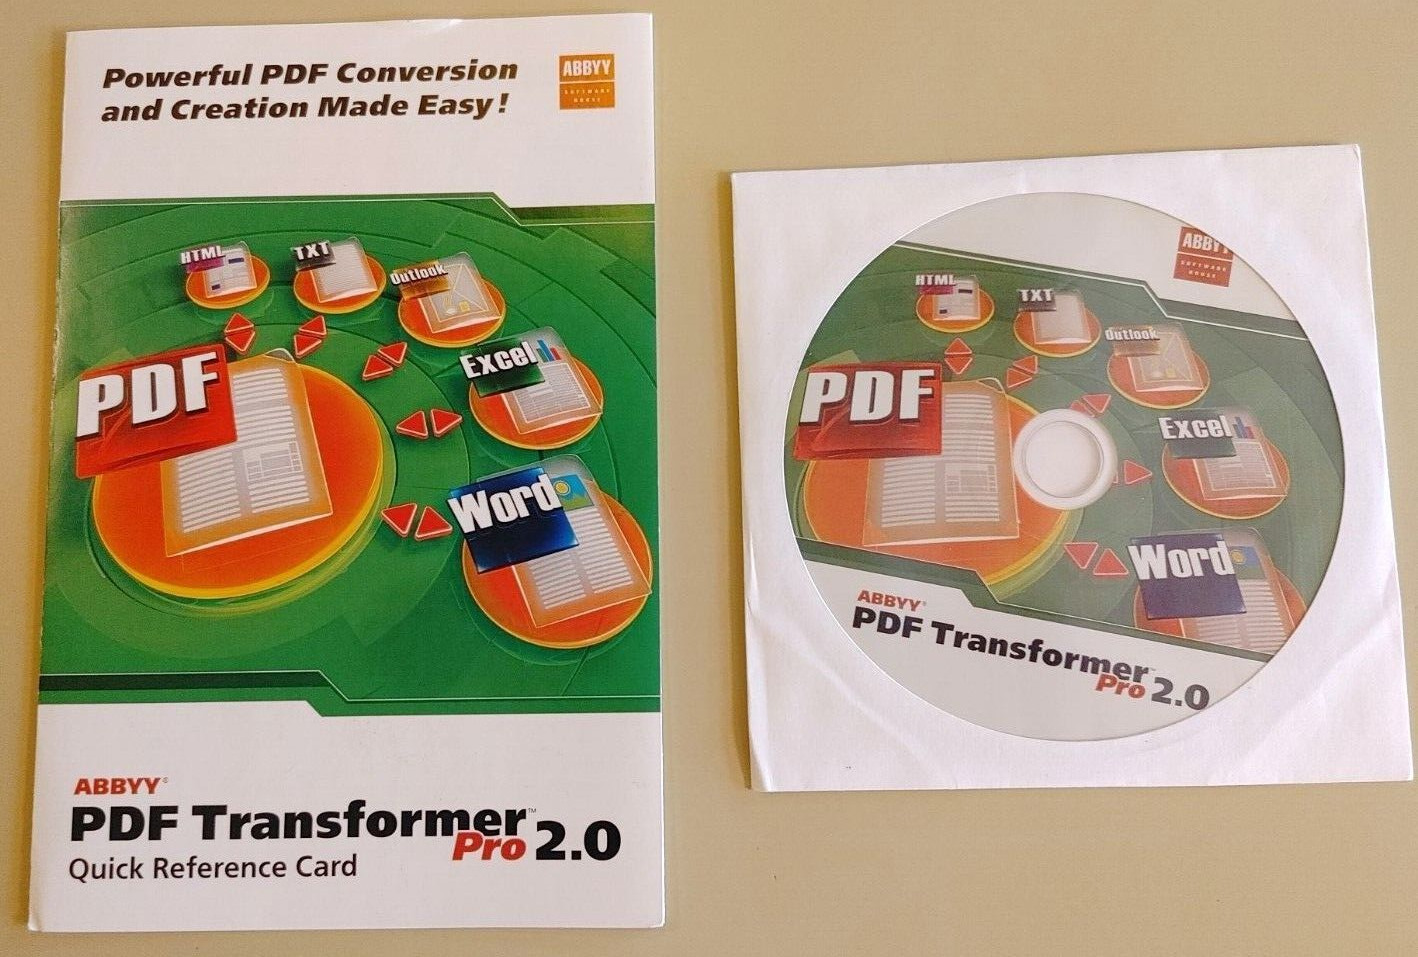 ABBYY PDF Transformer 2.0 Pro 2006 CD Software User Manual Transformer Pro 2.0